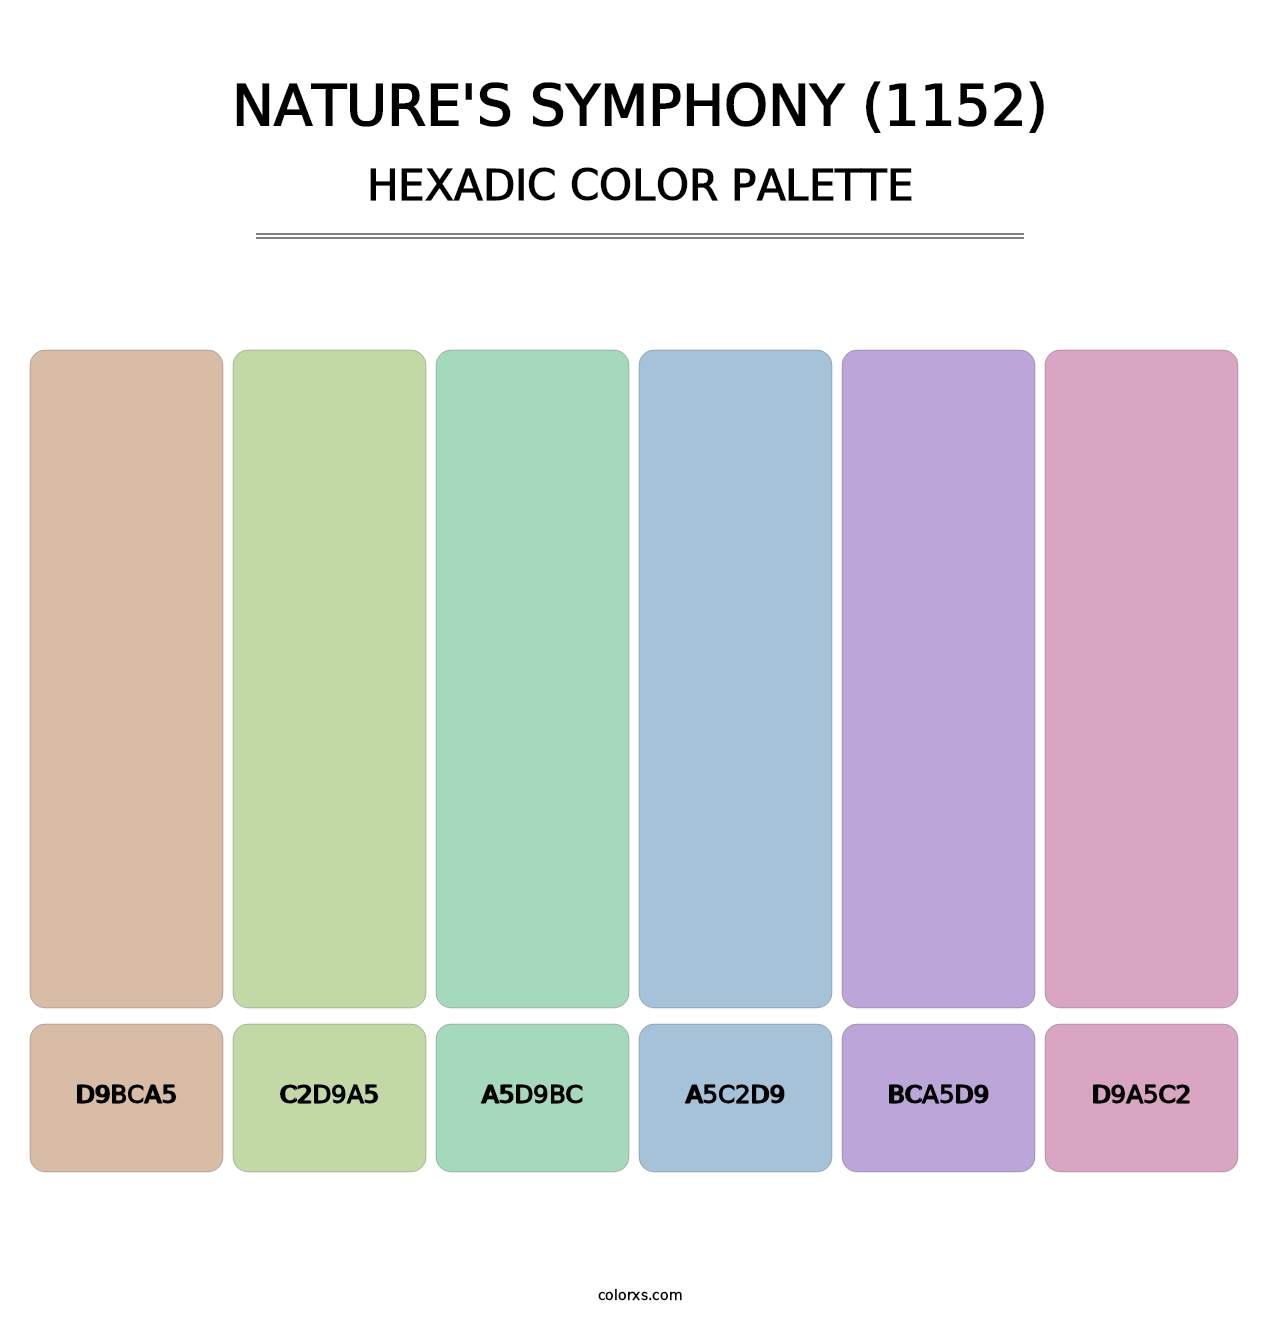 Nature's Symphony (1152) - Hexadic Color Palette